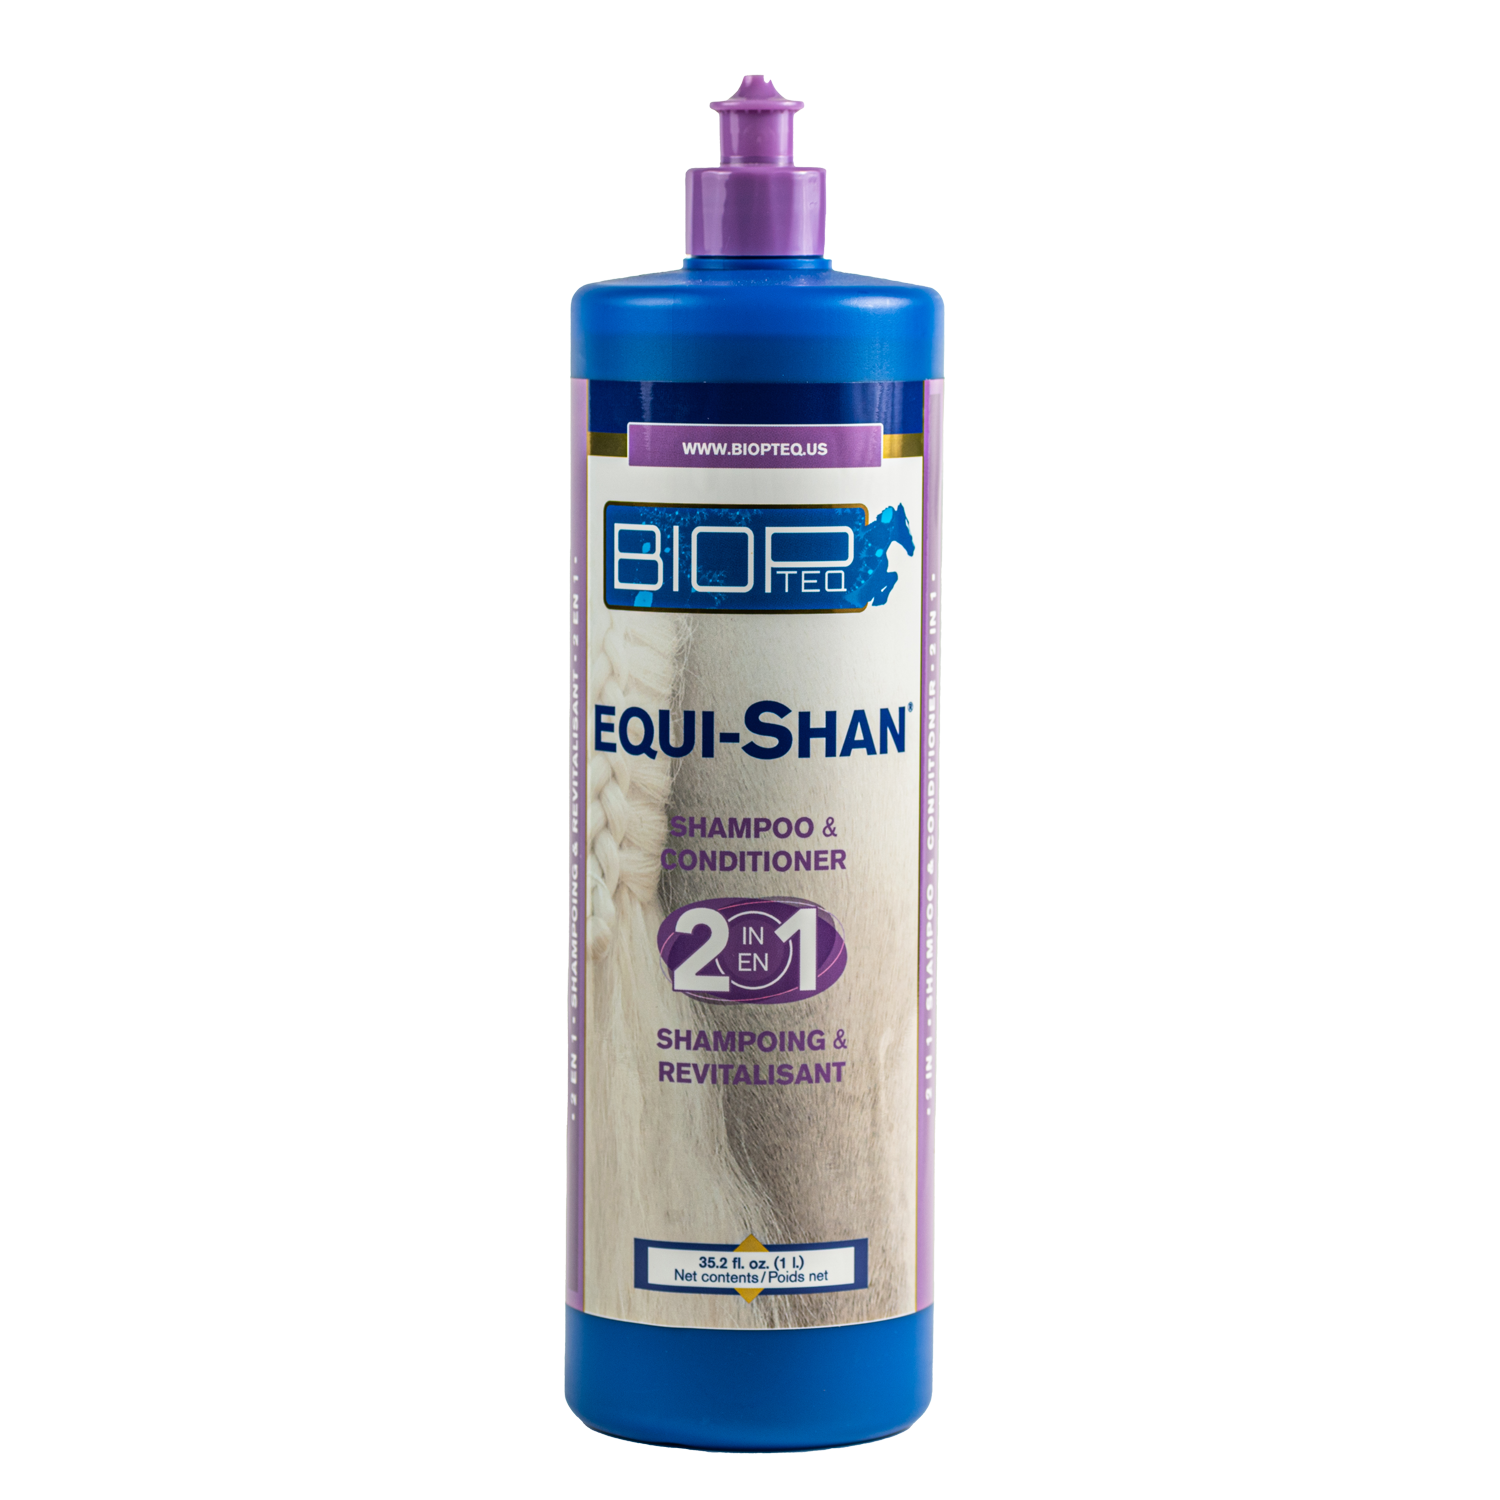 EQUI-SHAN© Shampoo & Conditioner FOR USA MARKET ONLY